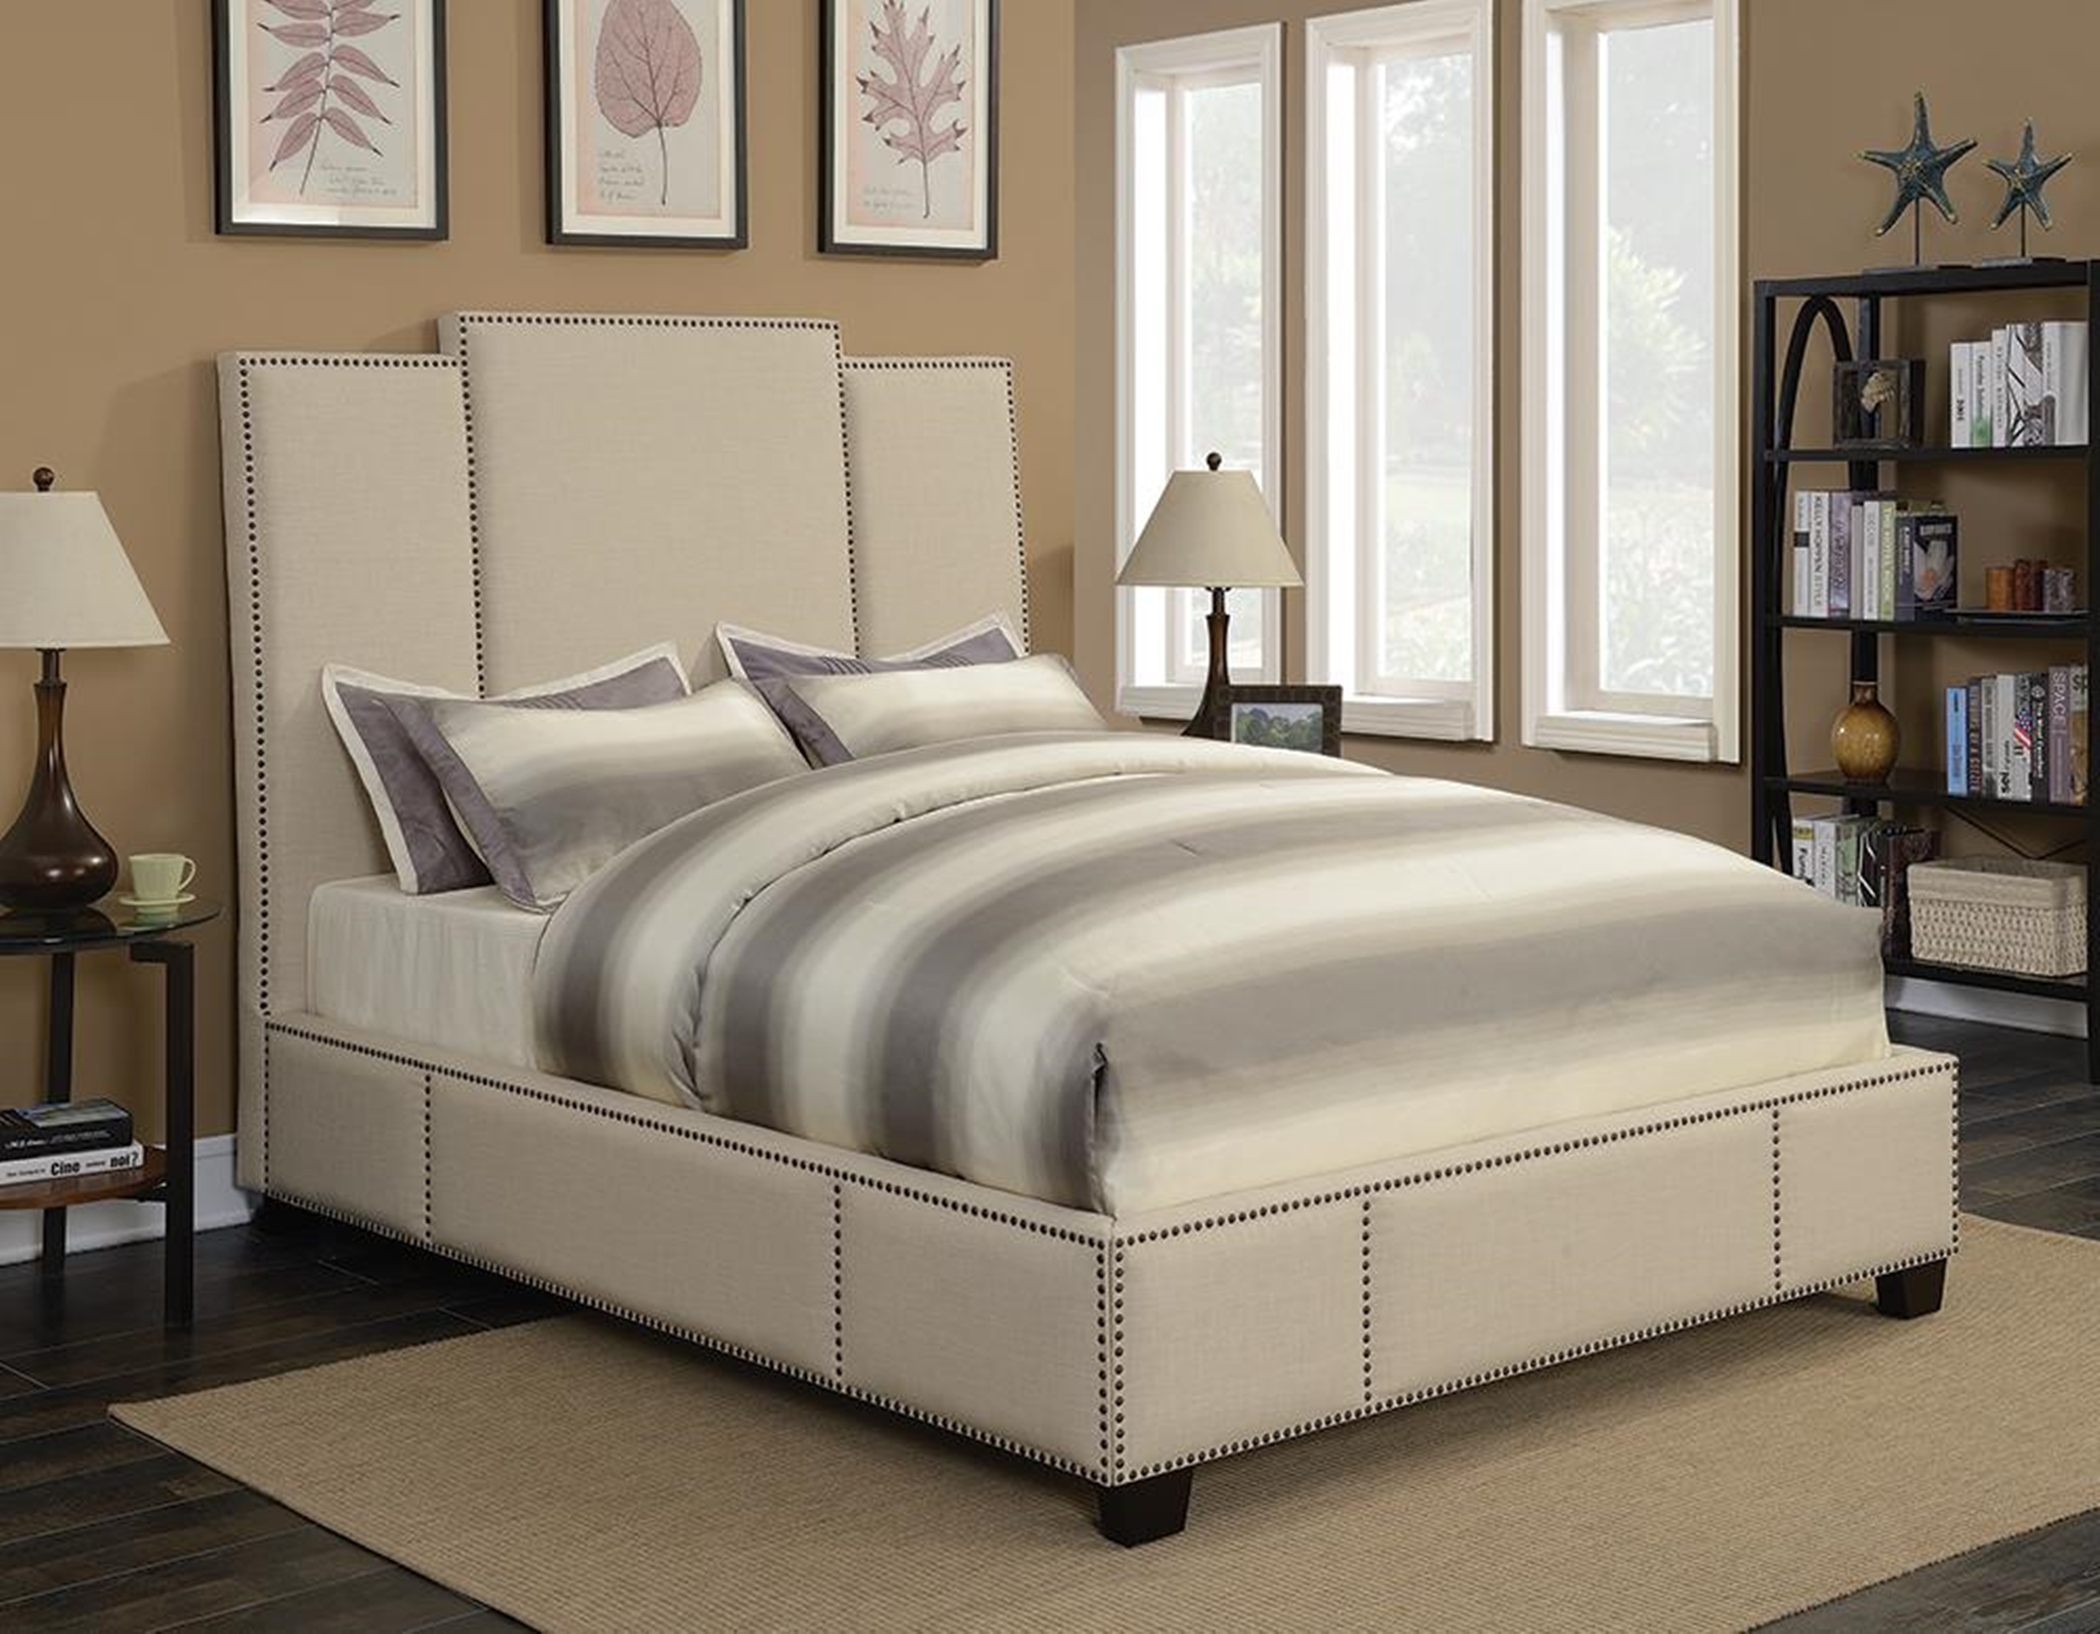 Lawndale Beige Upholstered Full Bed